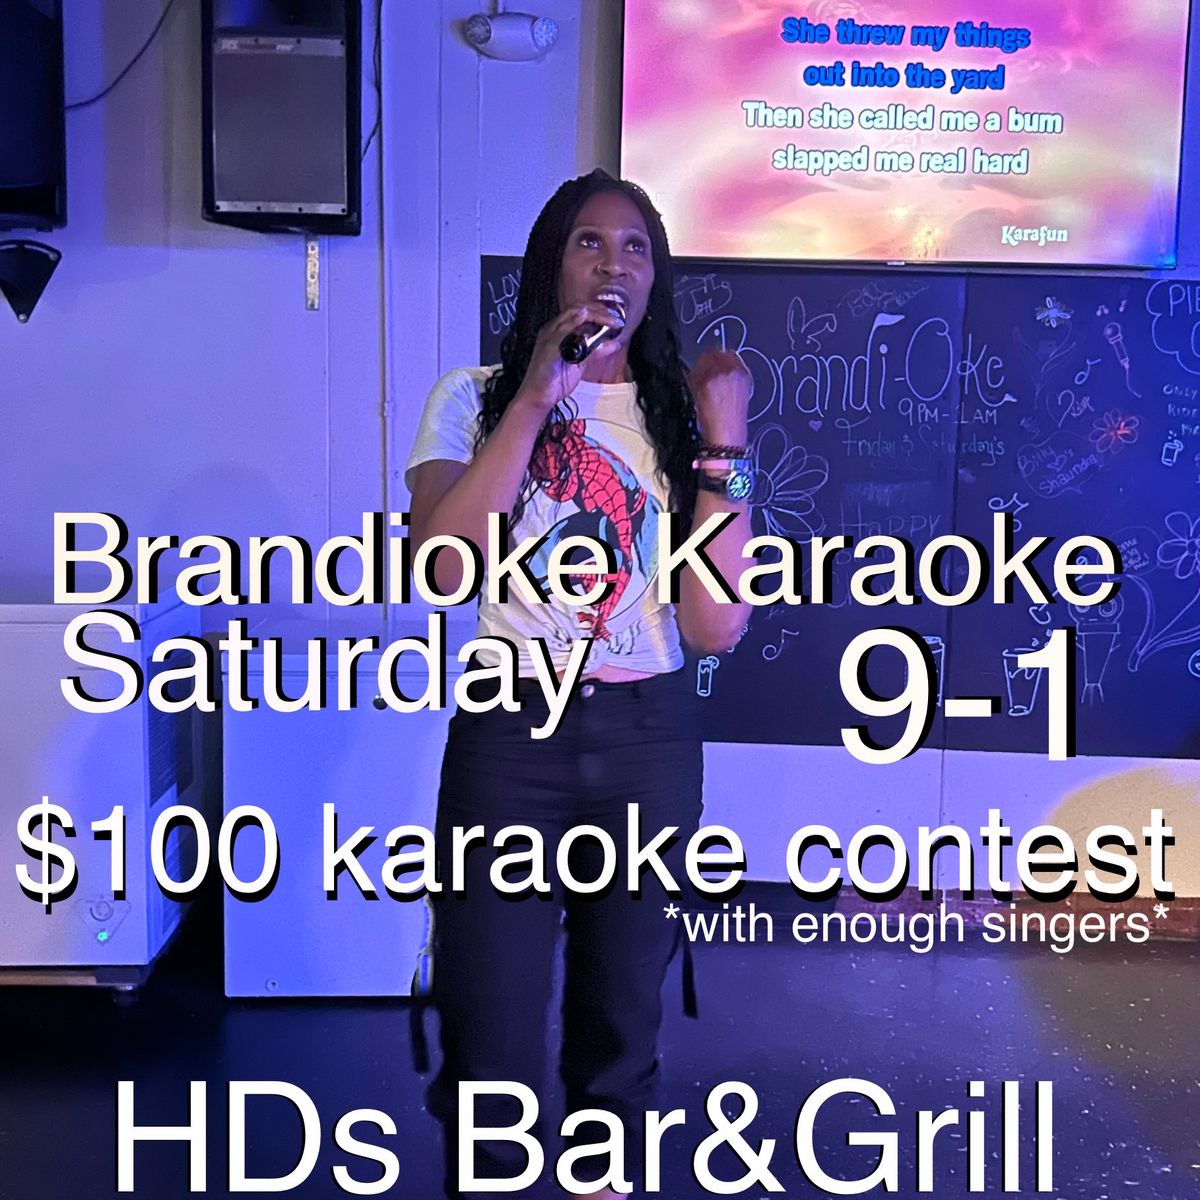 $100 karaoke contest! Brandioke Karaoke Saturdays 9-1